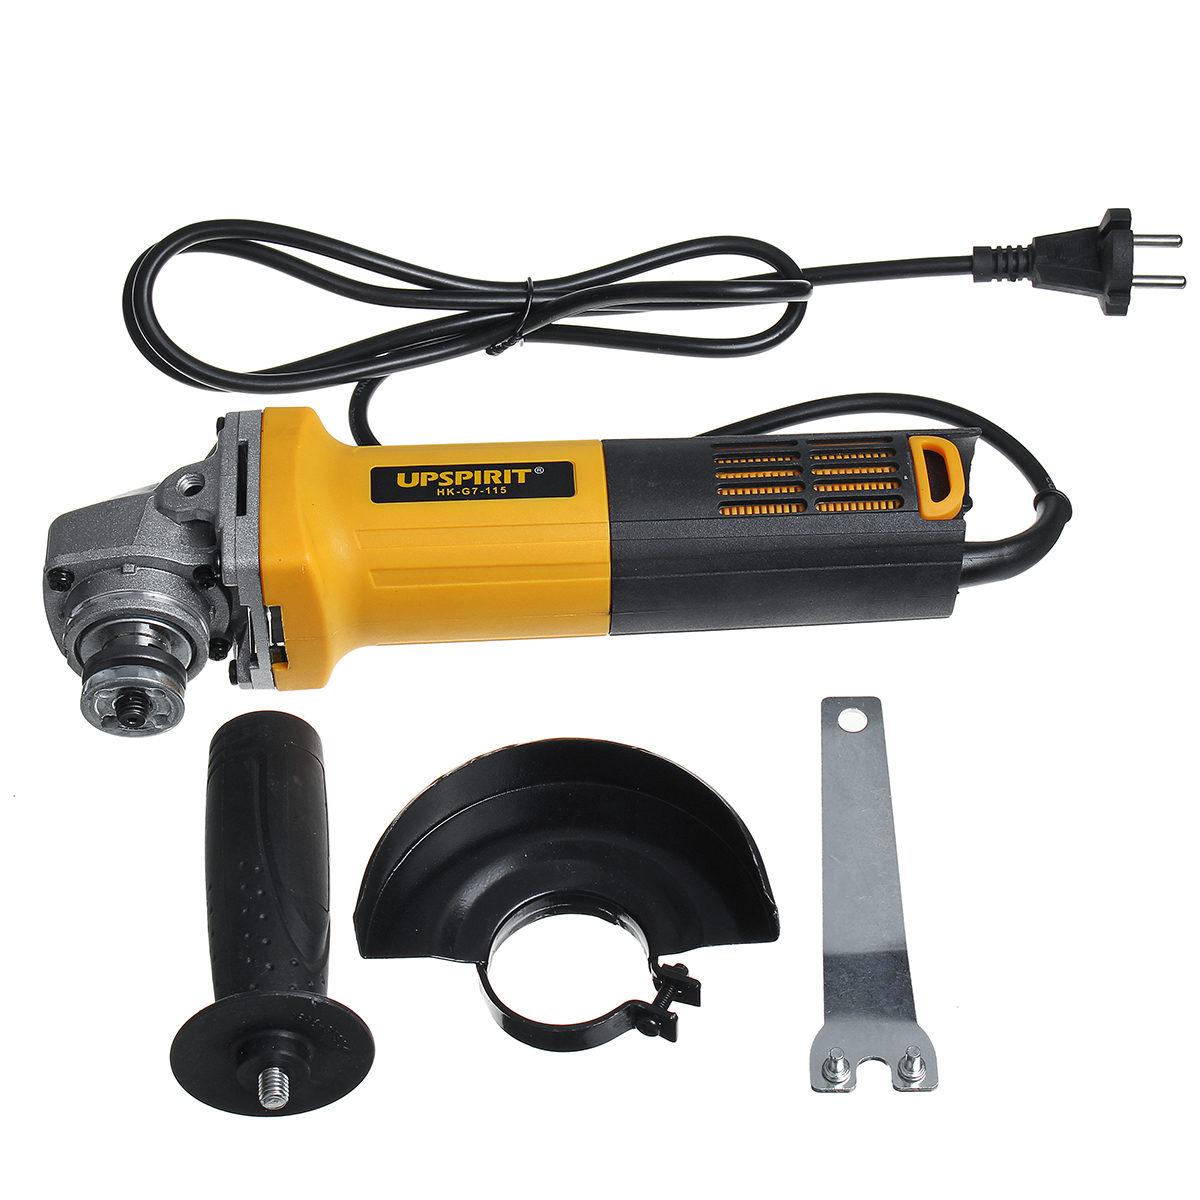 850W-10000RPM-Electric-Angle-Grinder-115mm-Grinding-Polishing-Machine-Polisher-Cutting-Tool-1560866-2